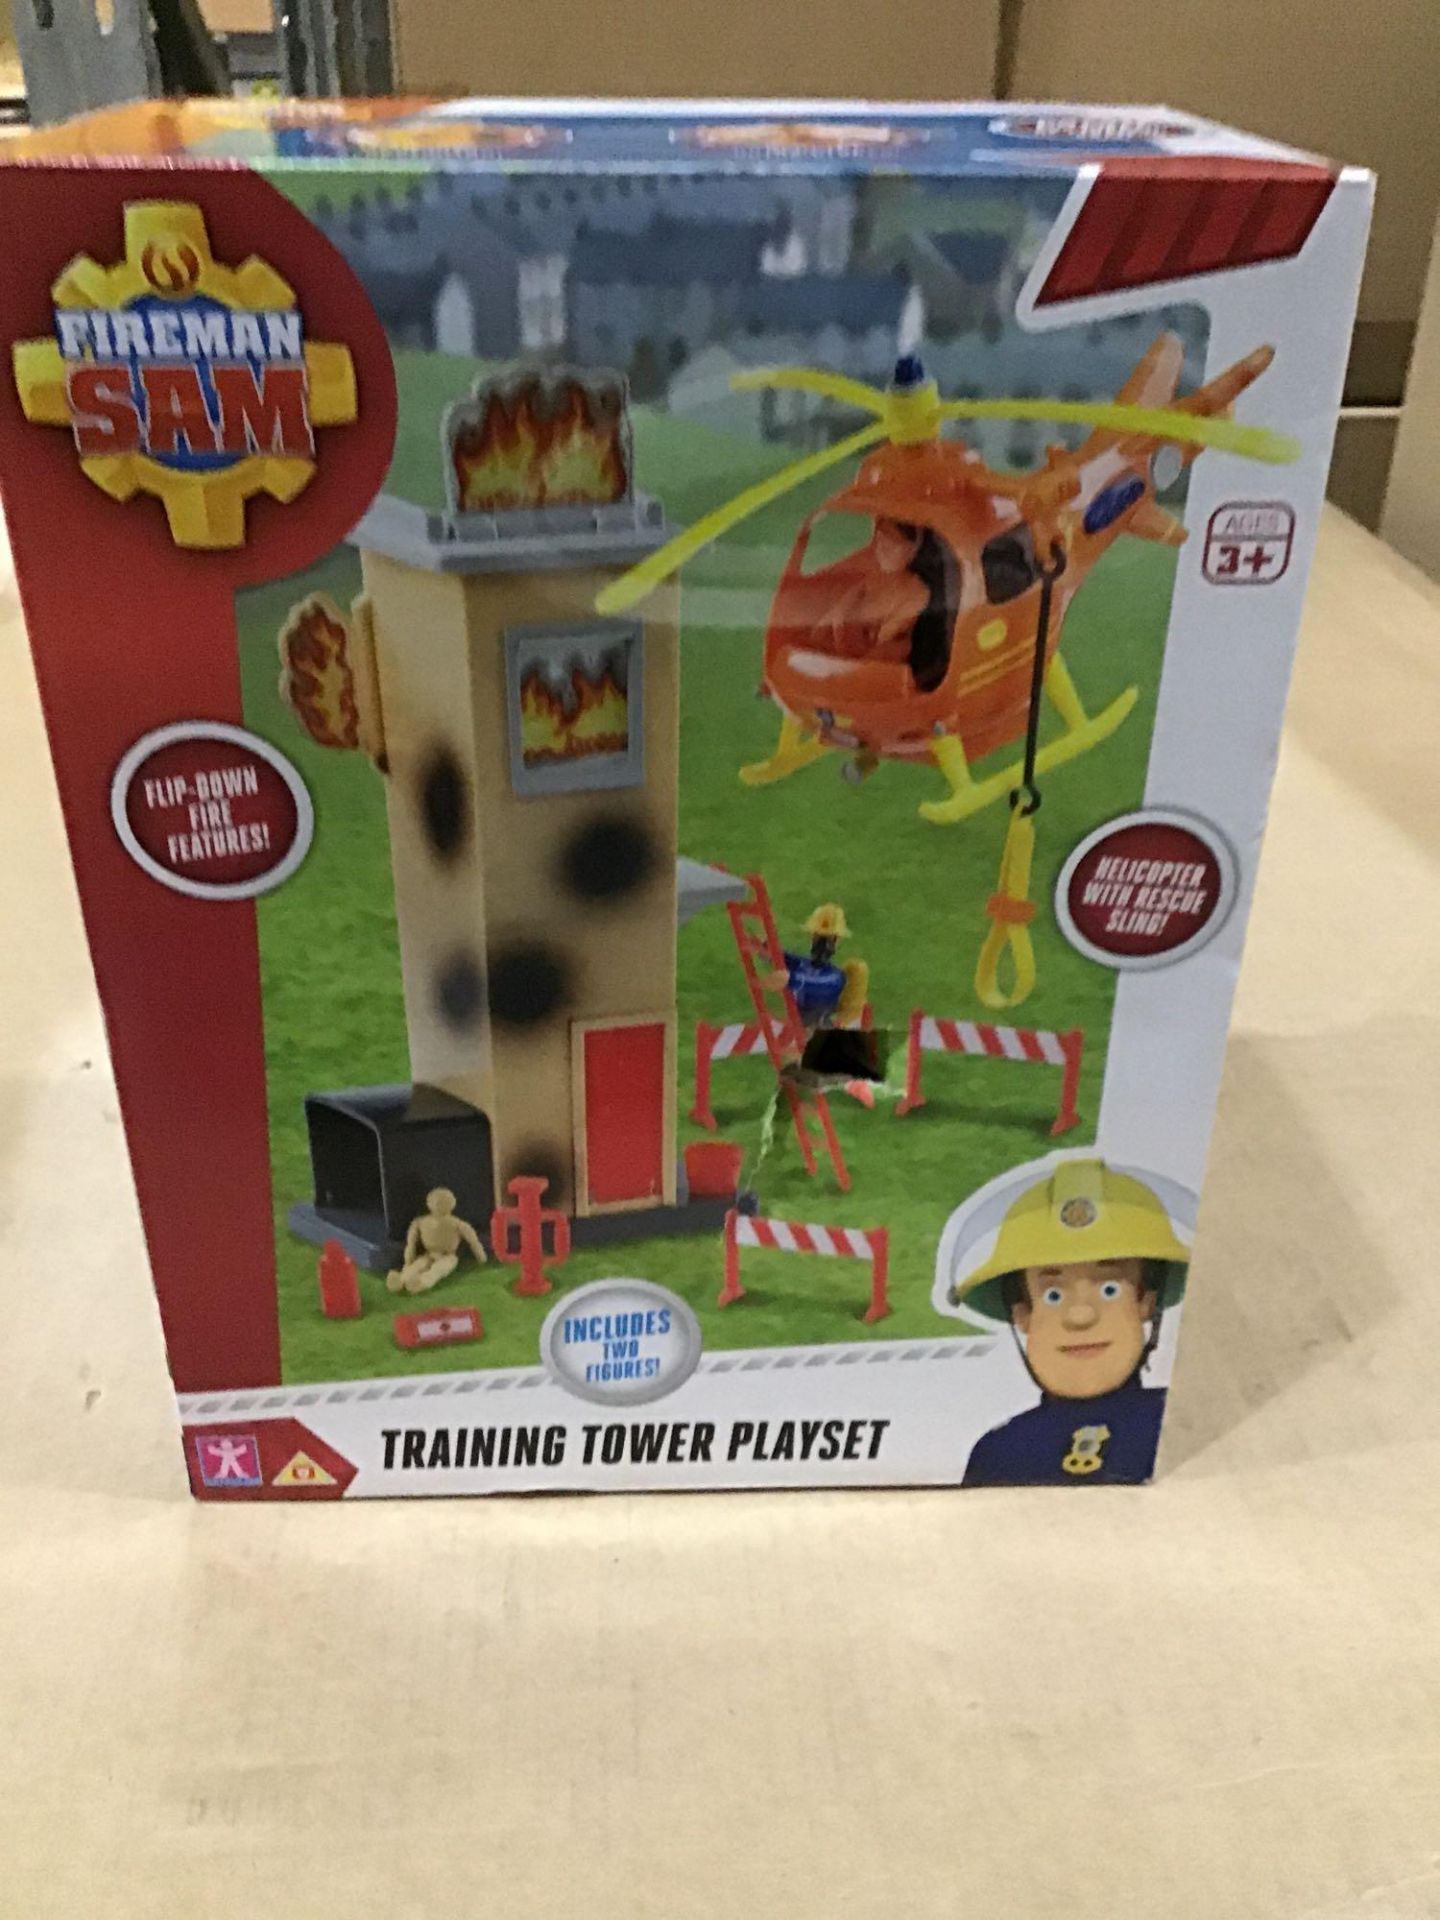 Fireman Sam Training Tower Playset - £15.00 RRP - Image 2 of 5